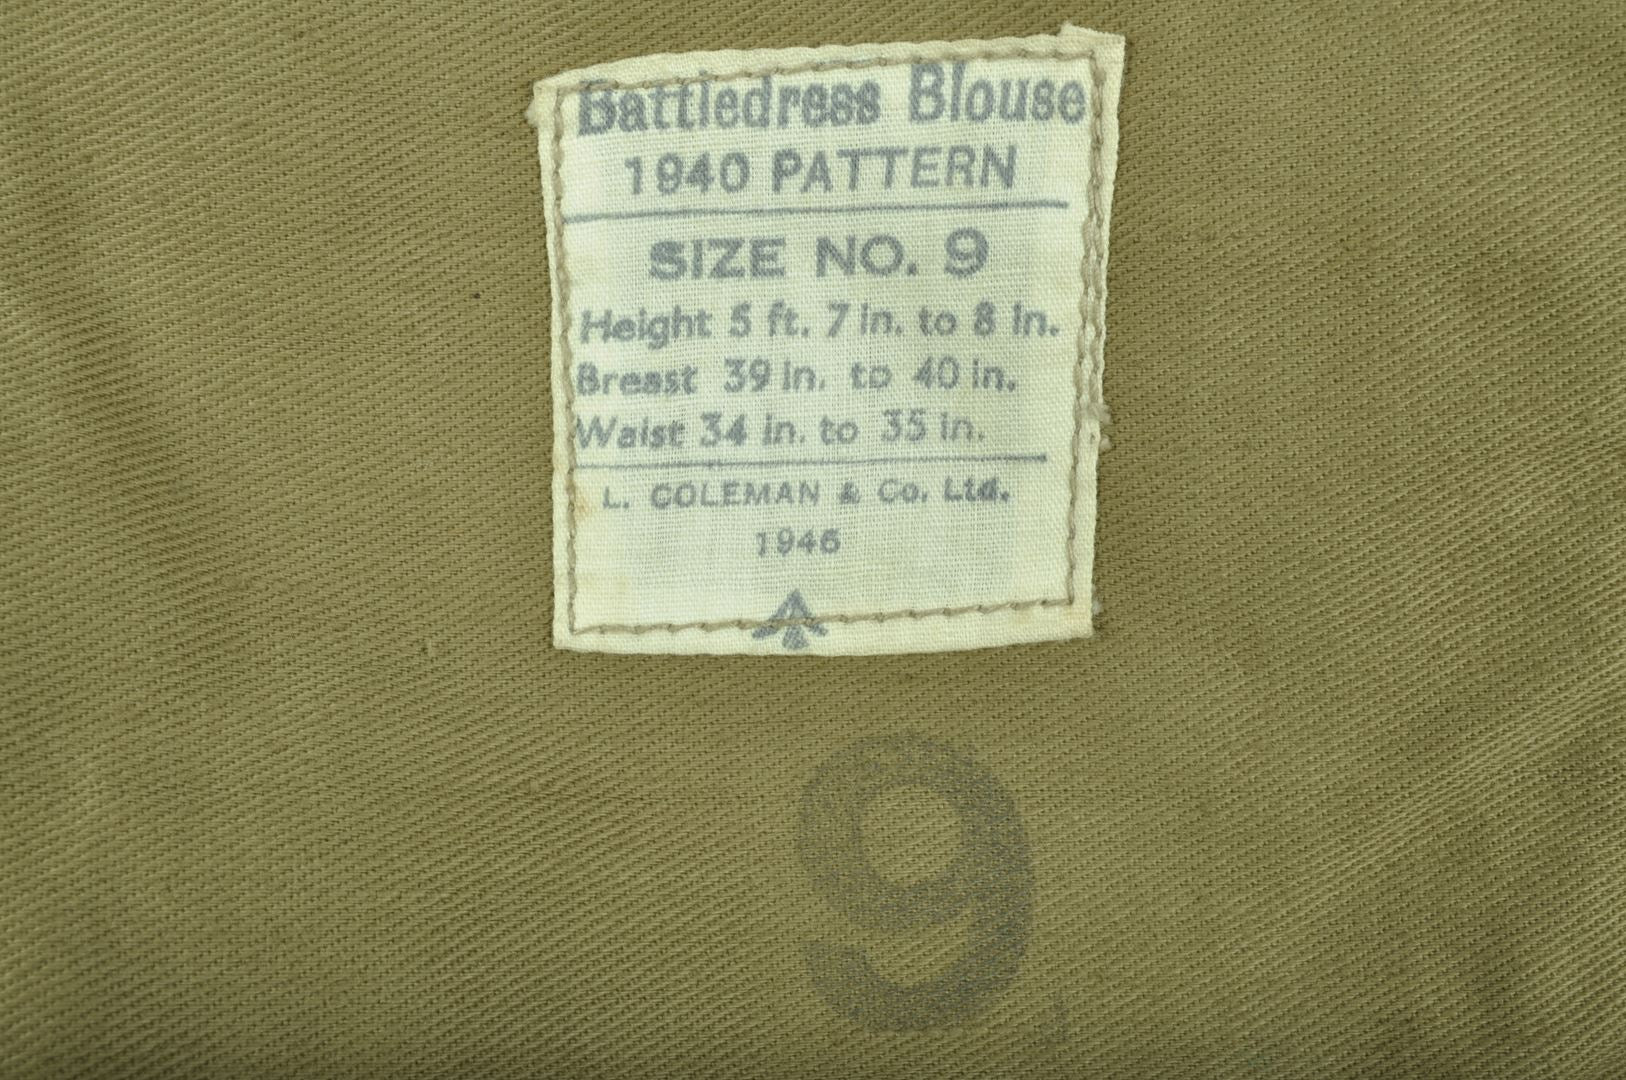 Blouson Battle Dress pattern 40 "Royal Corps of Signals" + Brassard